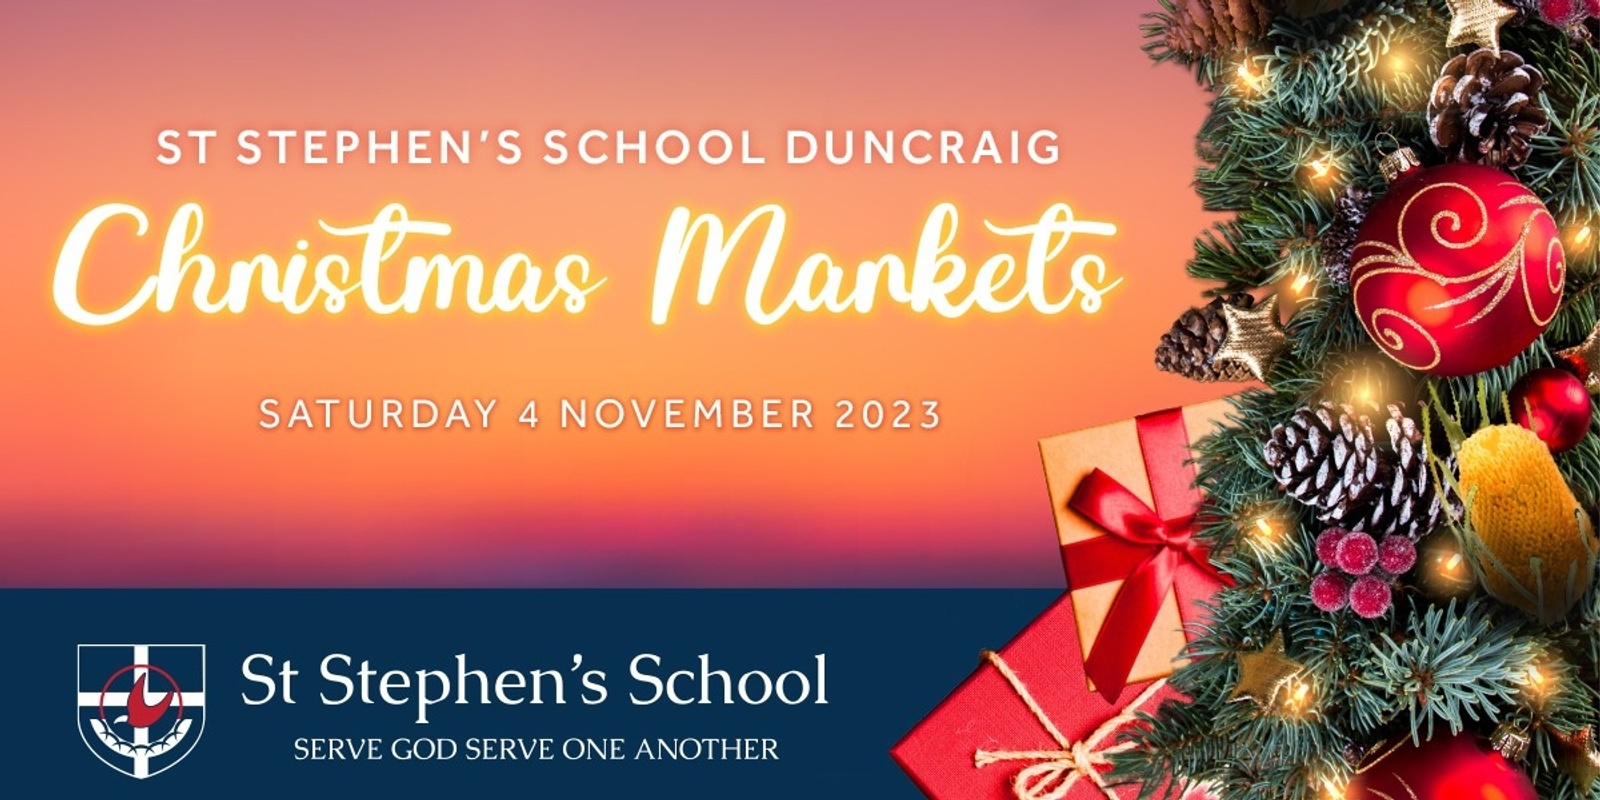 Banner image for St Stephen's School Duncraig Christmas Markets 2023